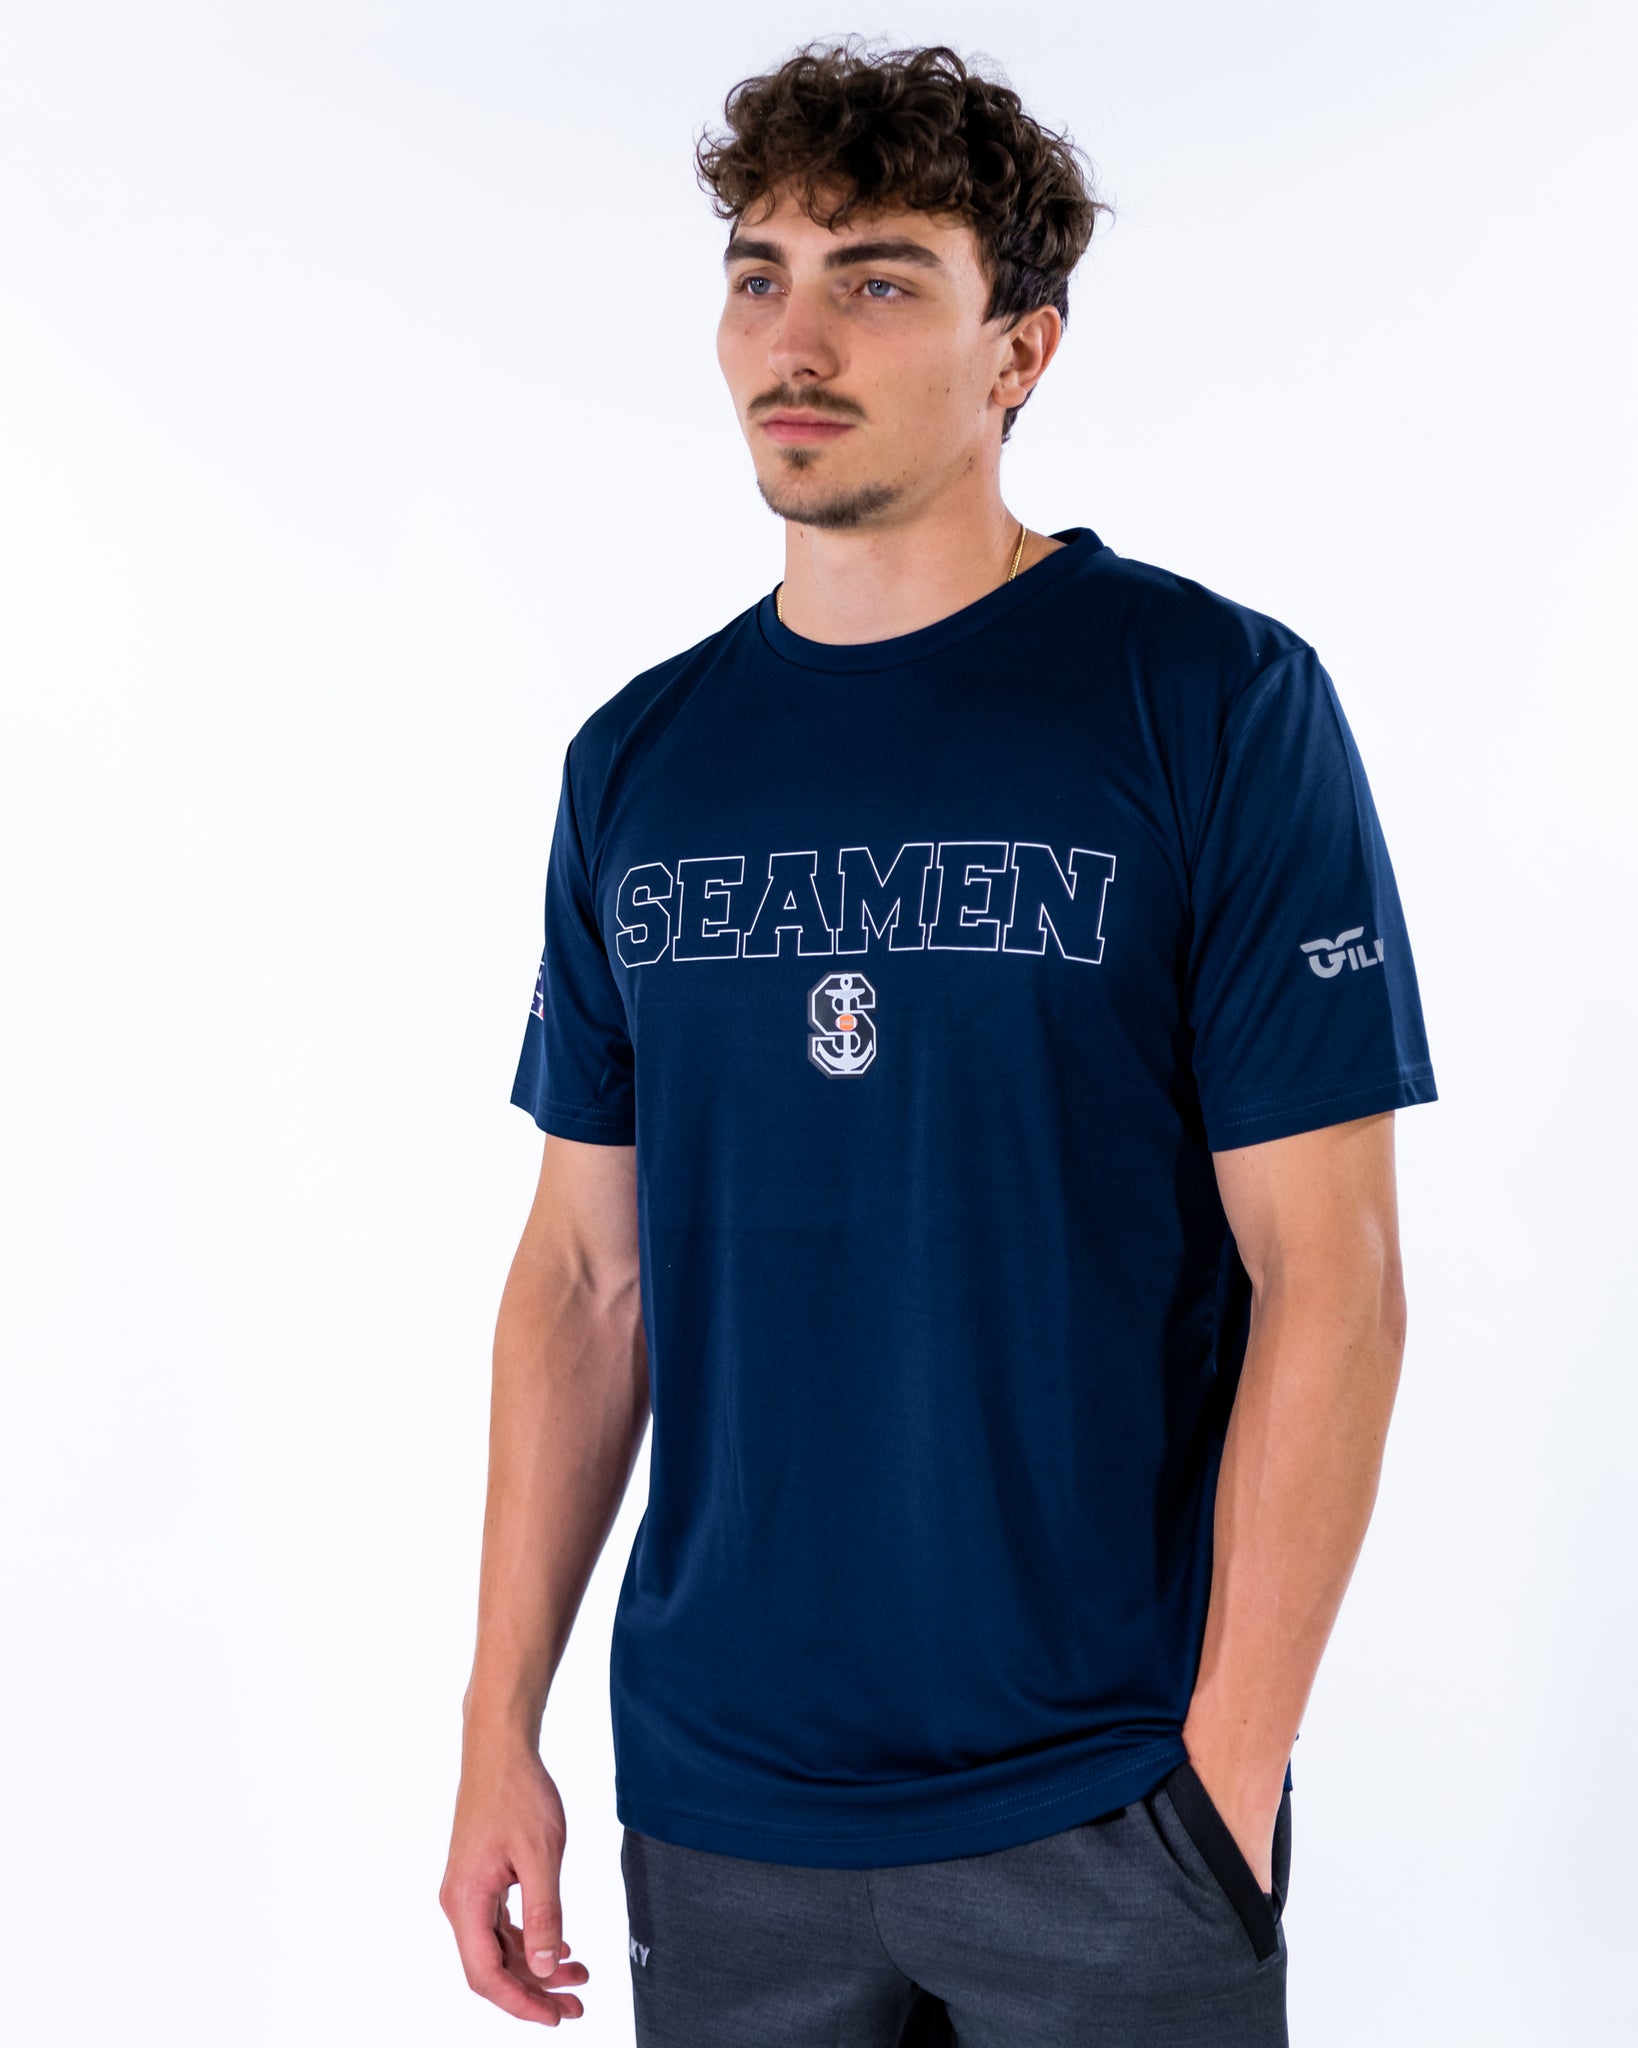 Milano Seamen On-Field Performance T-Shirt